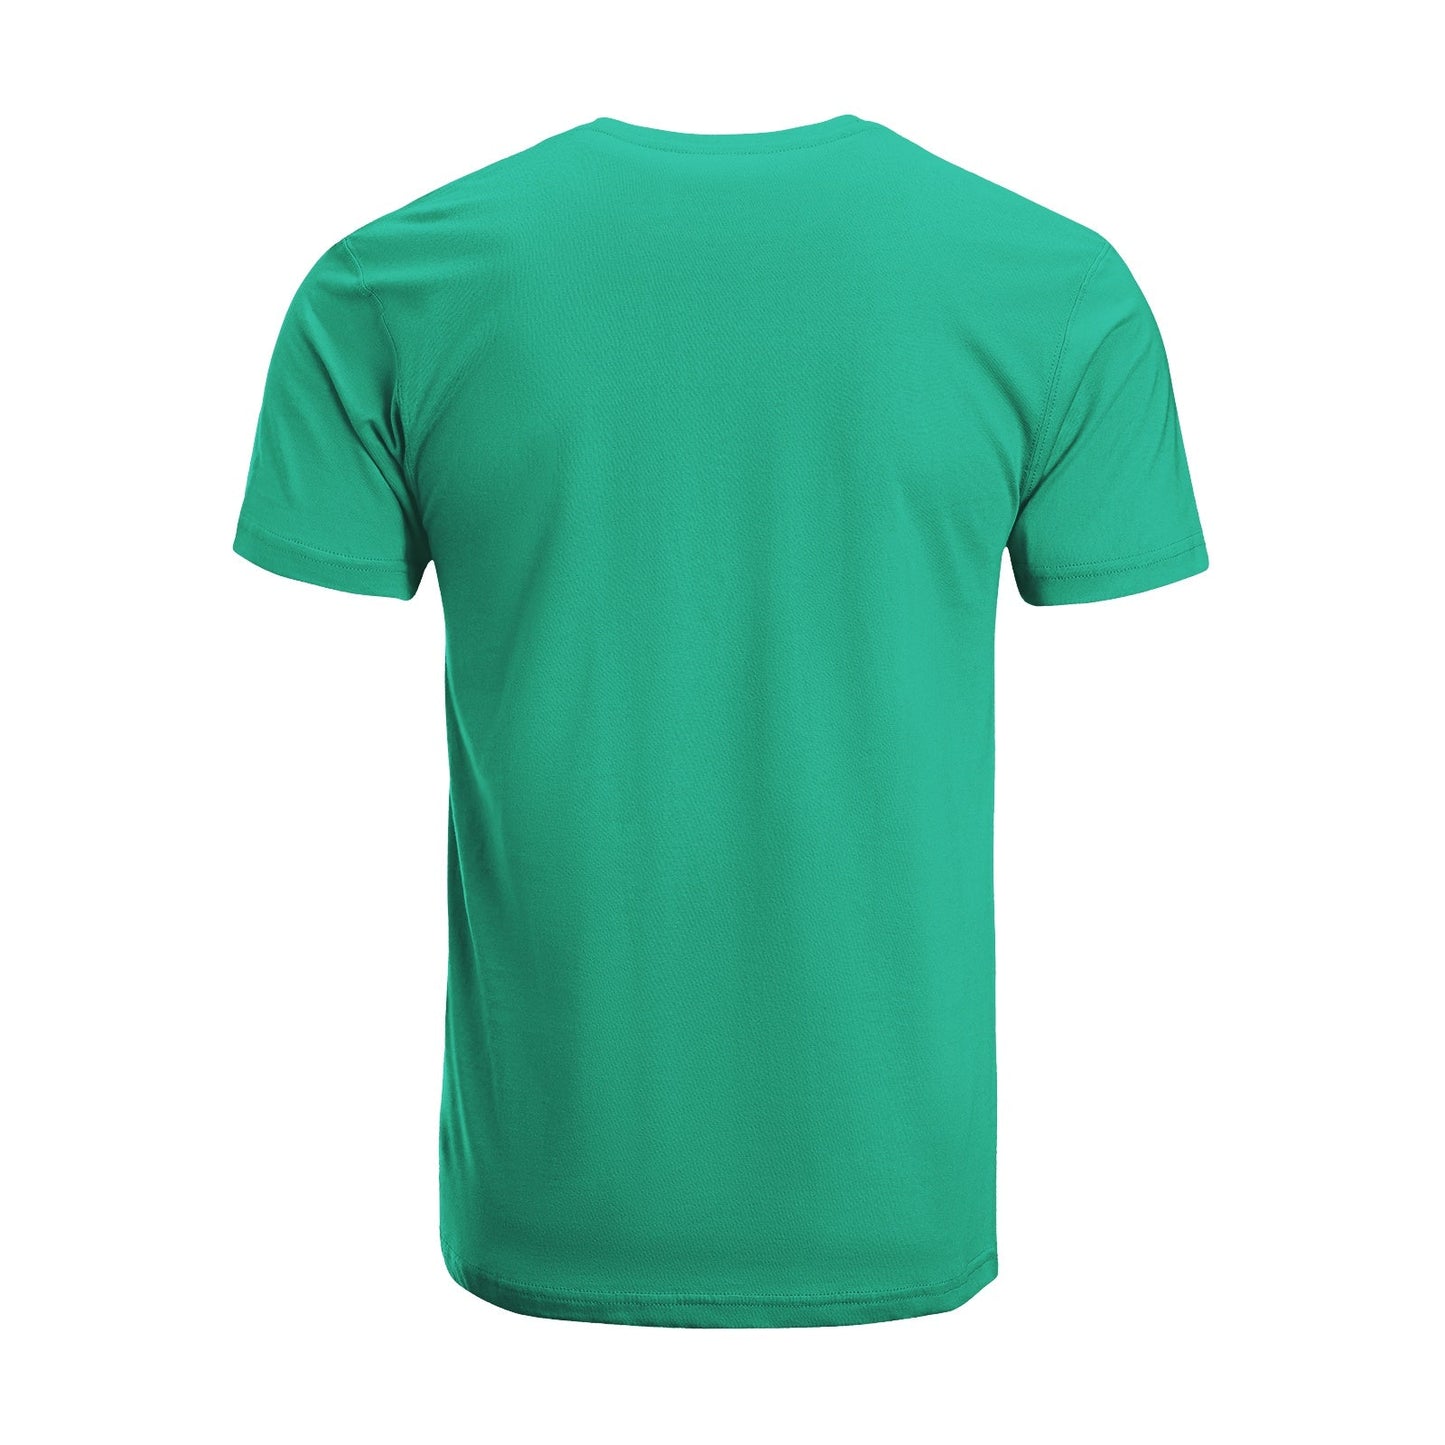 Unisex Short Sleeve Crew Neck Cotton Jersey T-Shirt Cat 14 - Tara-Outfits.com